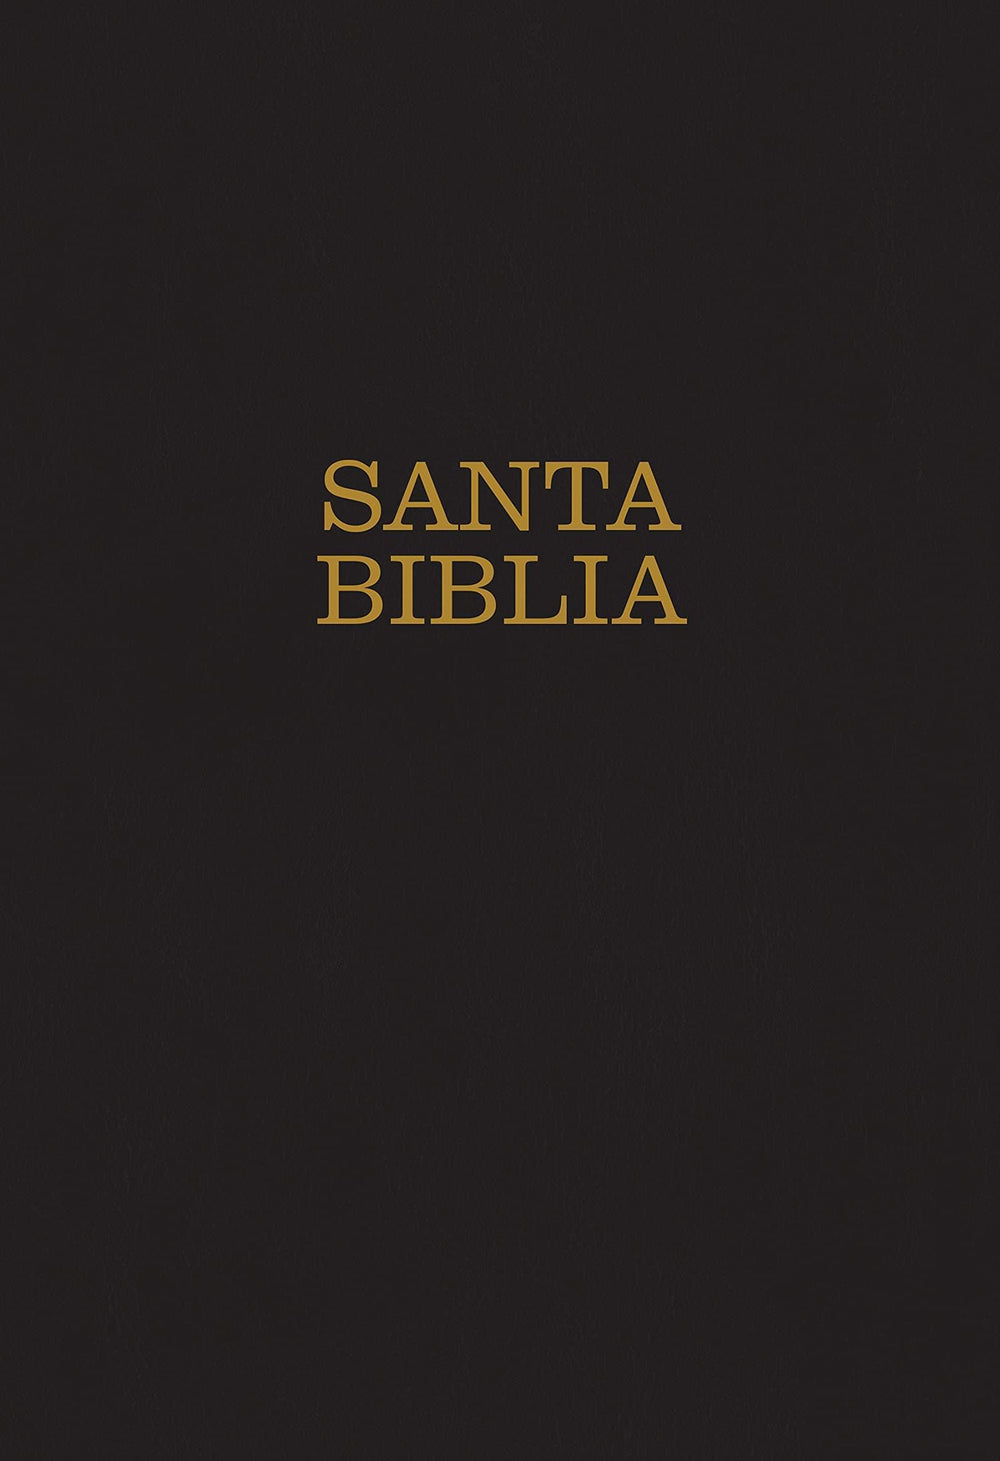 Santa Biblia NTV, letra súper gigante negra - Pura Vida Books